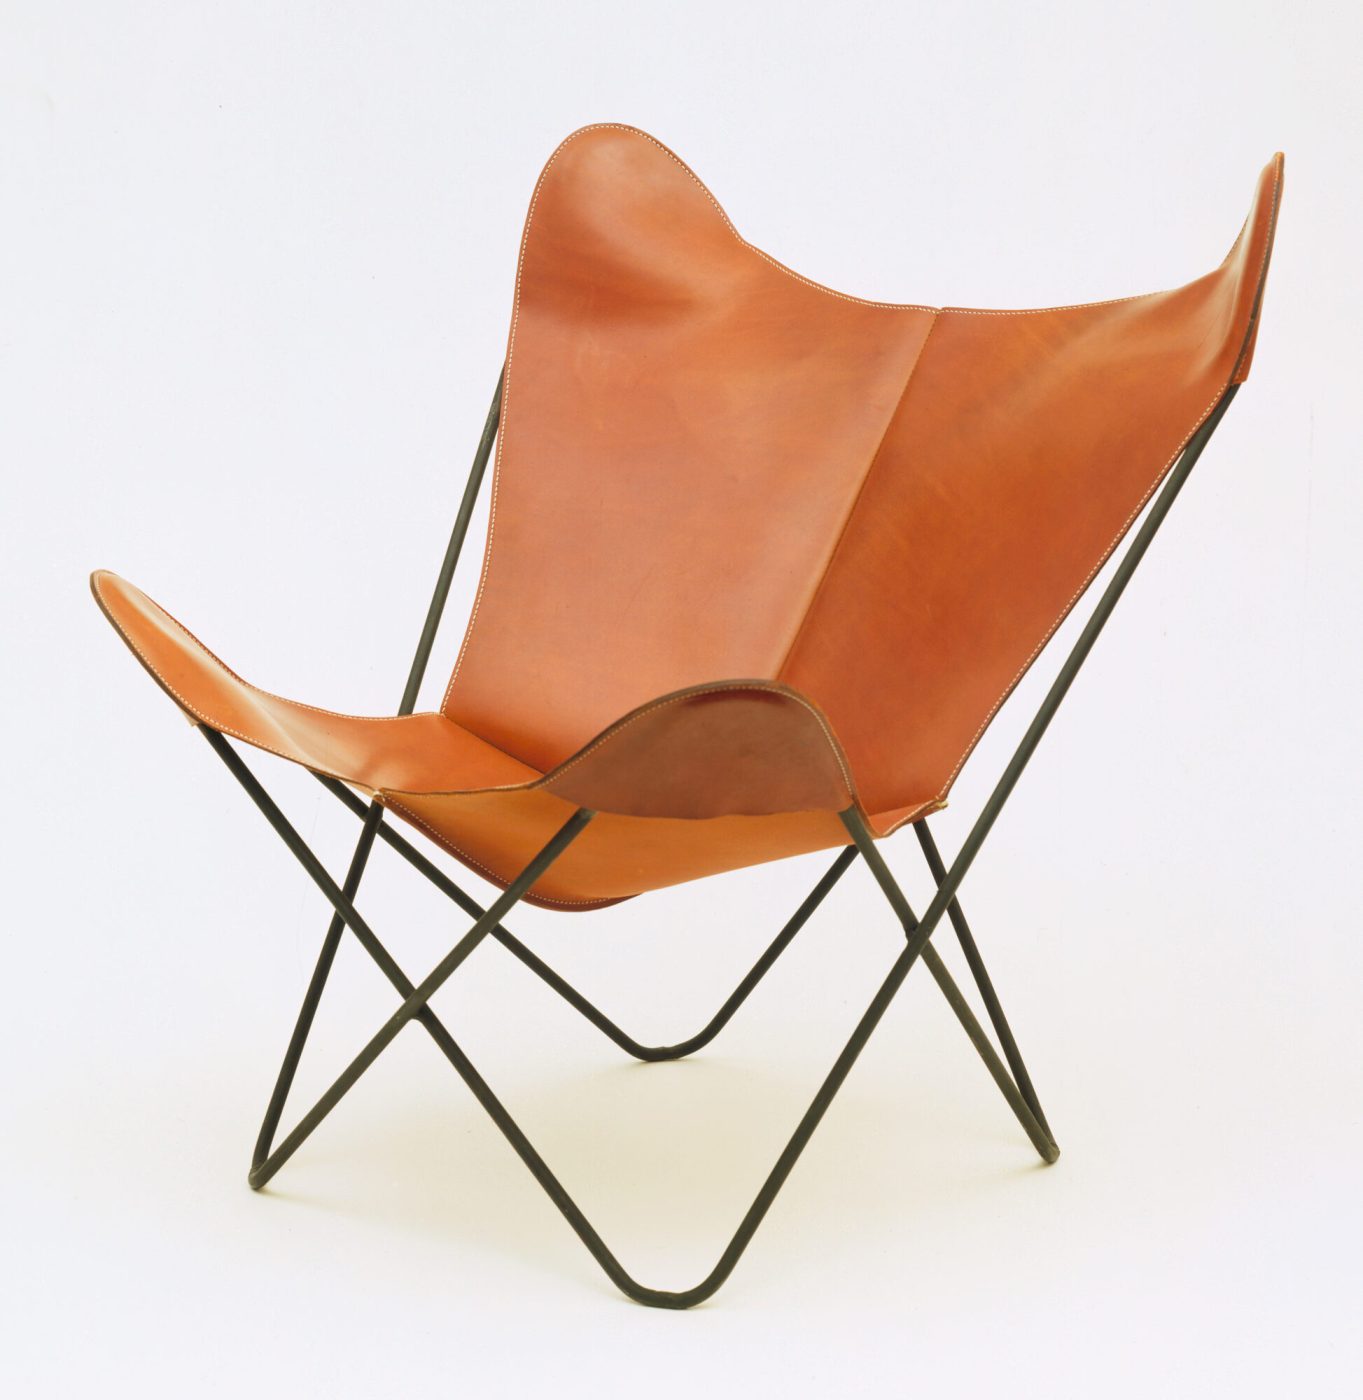 A 1938 B.K.F. chair, created by Spaniard Antonio Bonet and Argentines Juan Kurchan and Jorge Ferrari-Hardoy